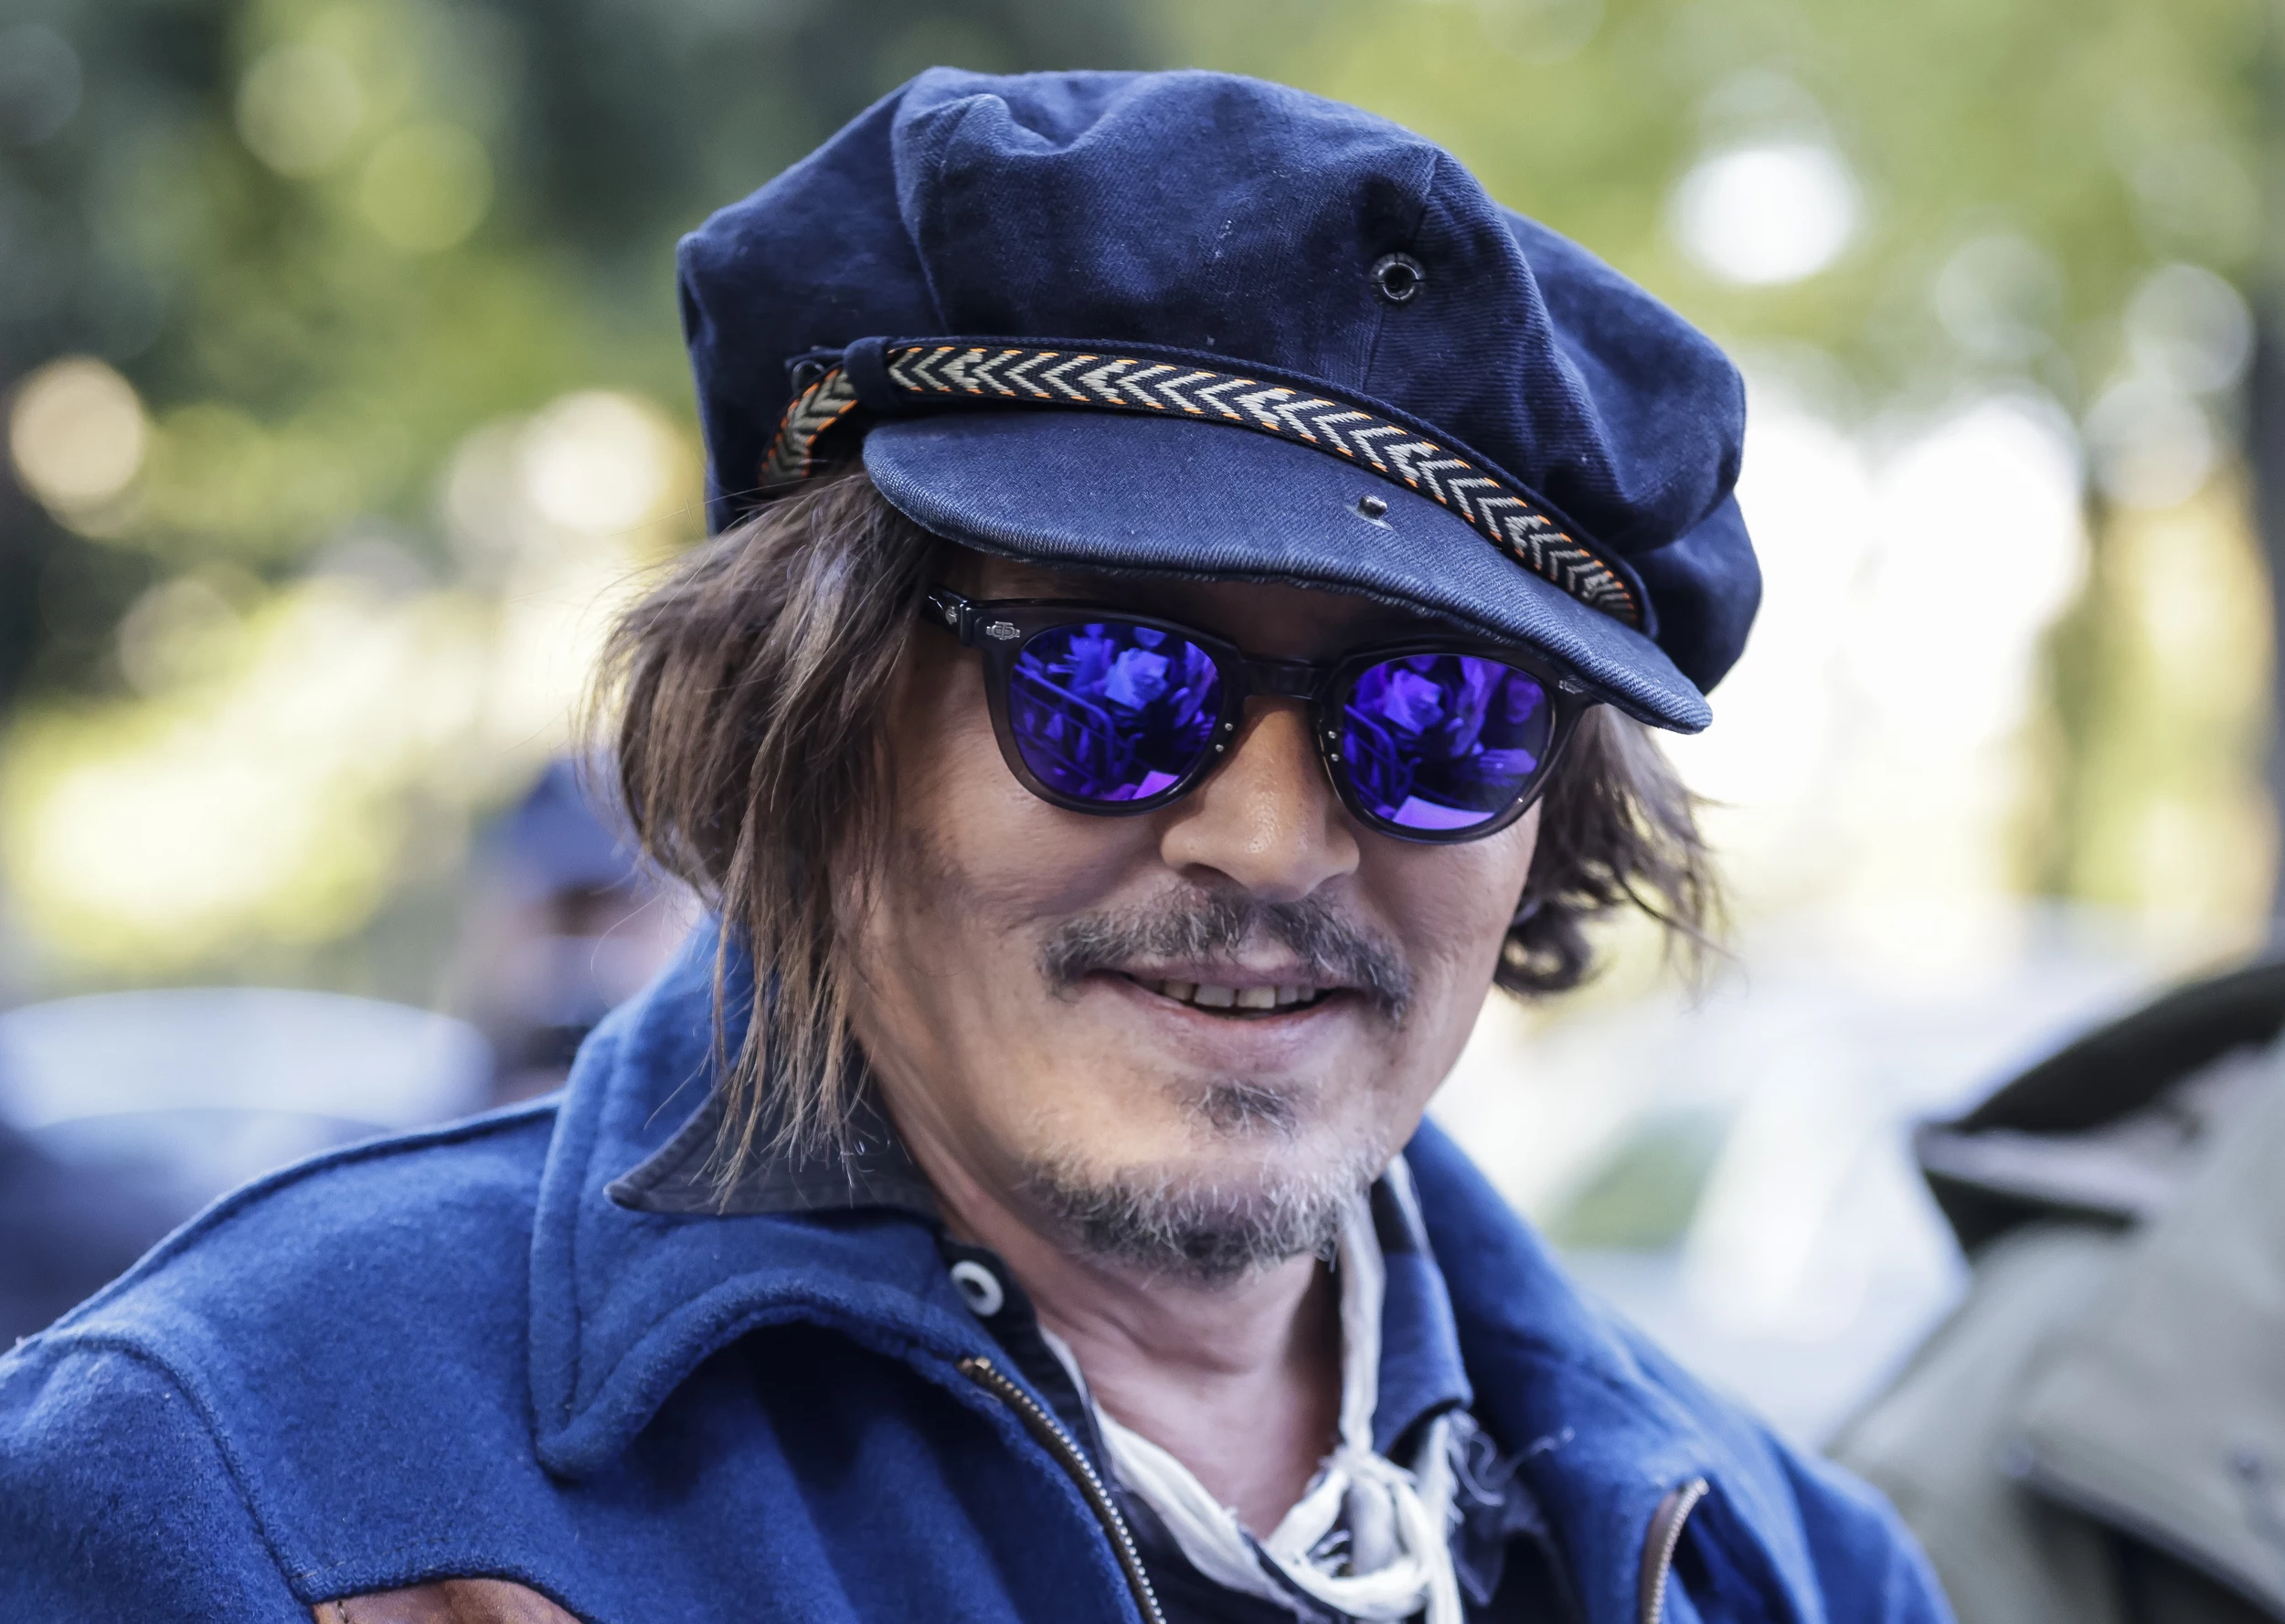 Johnny Depp Was in Owensboro KY